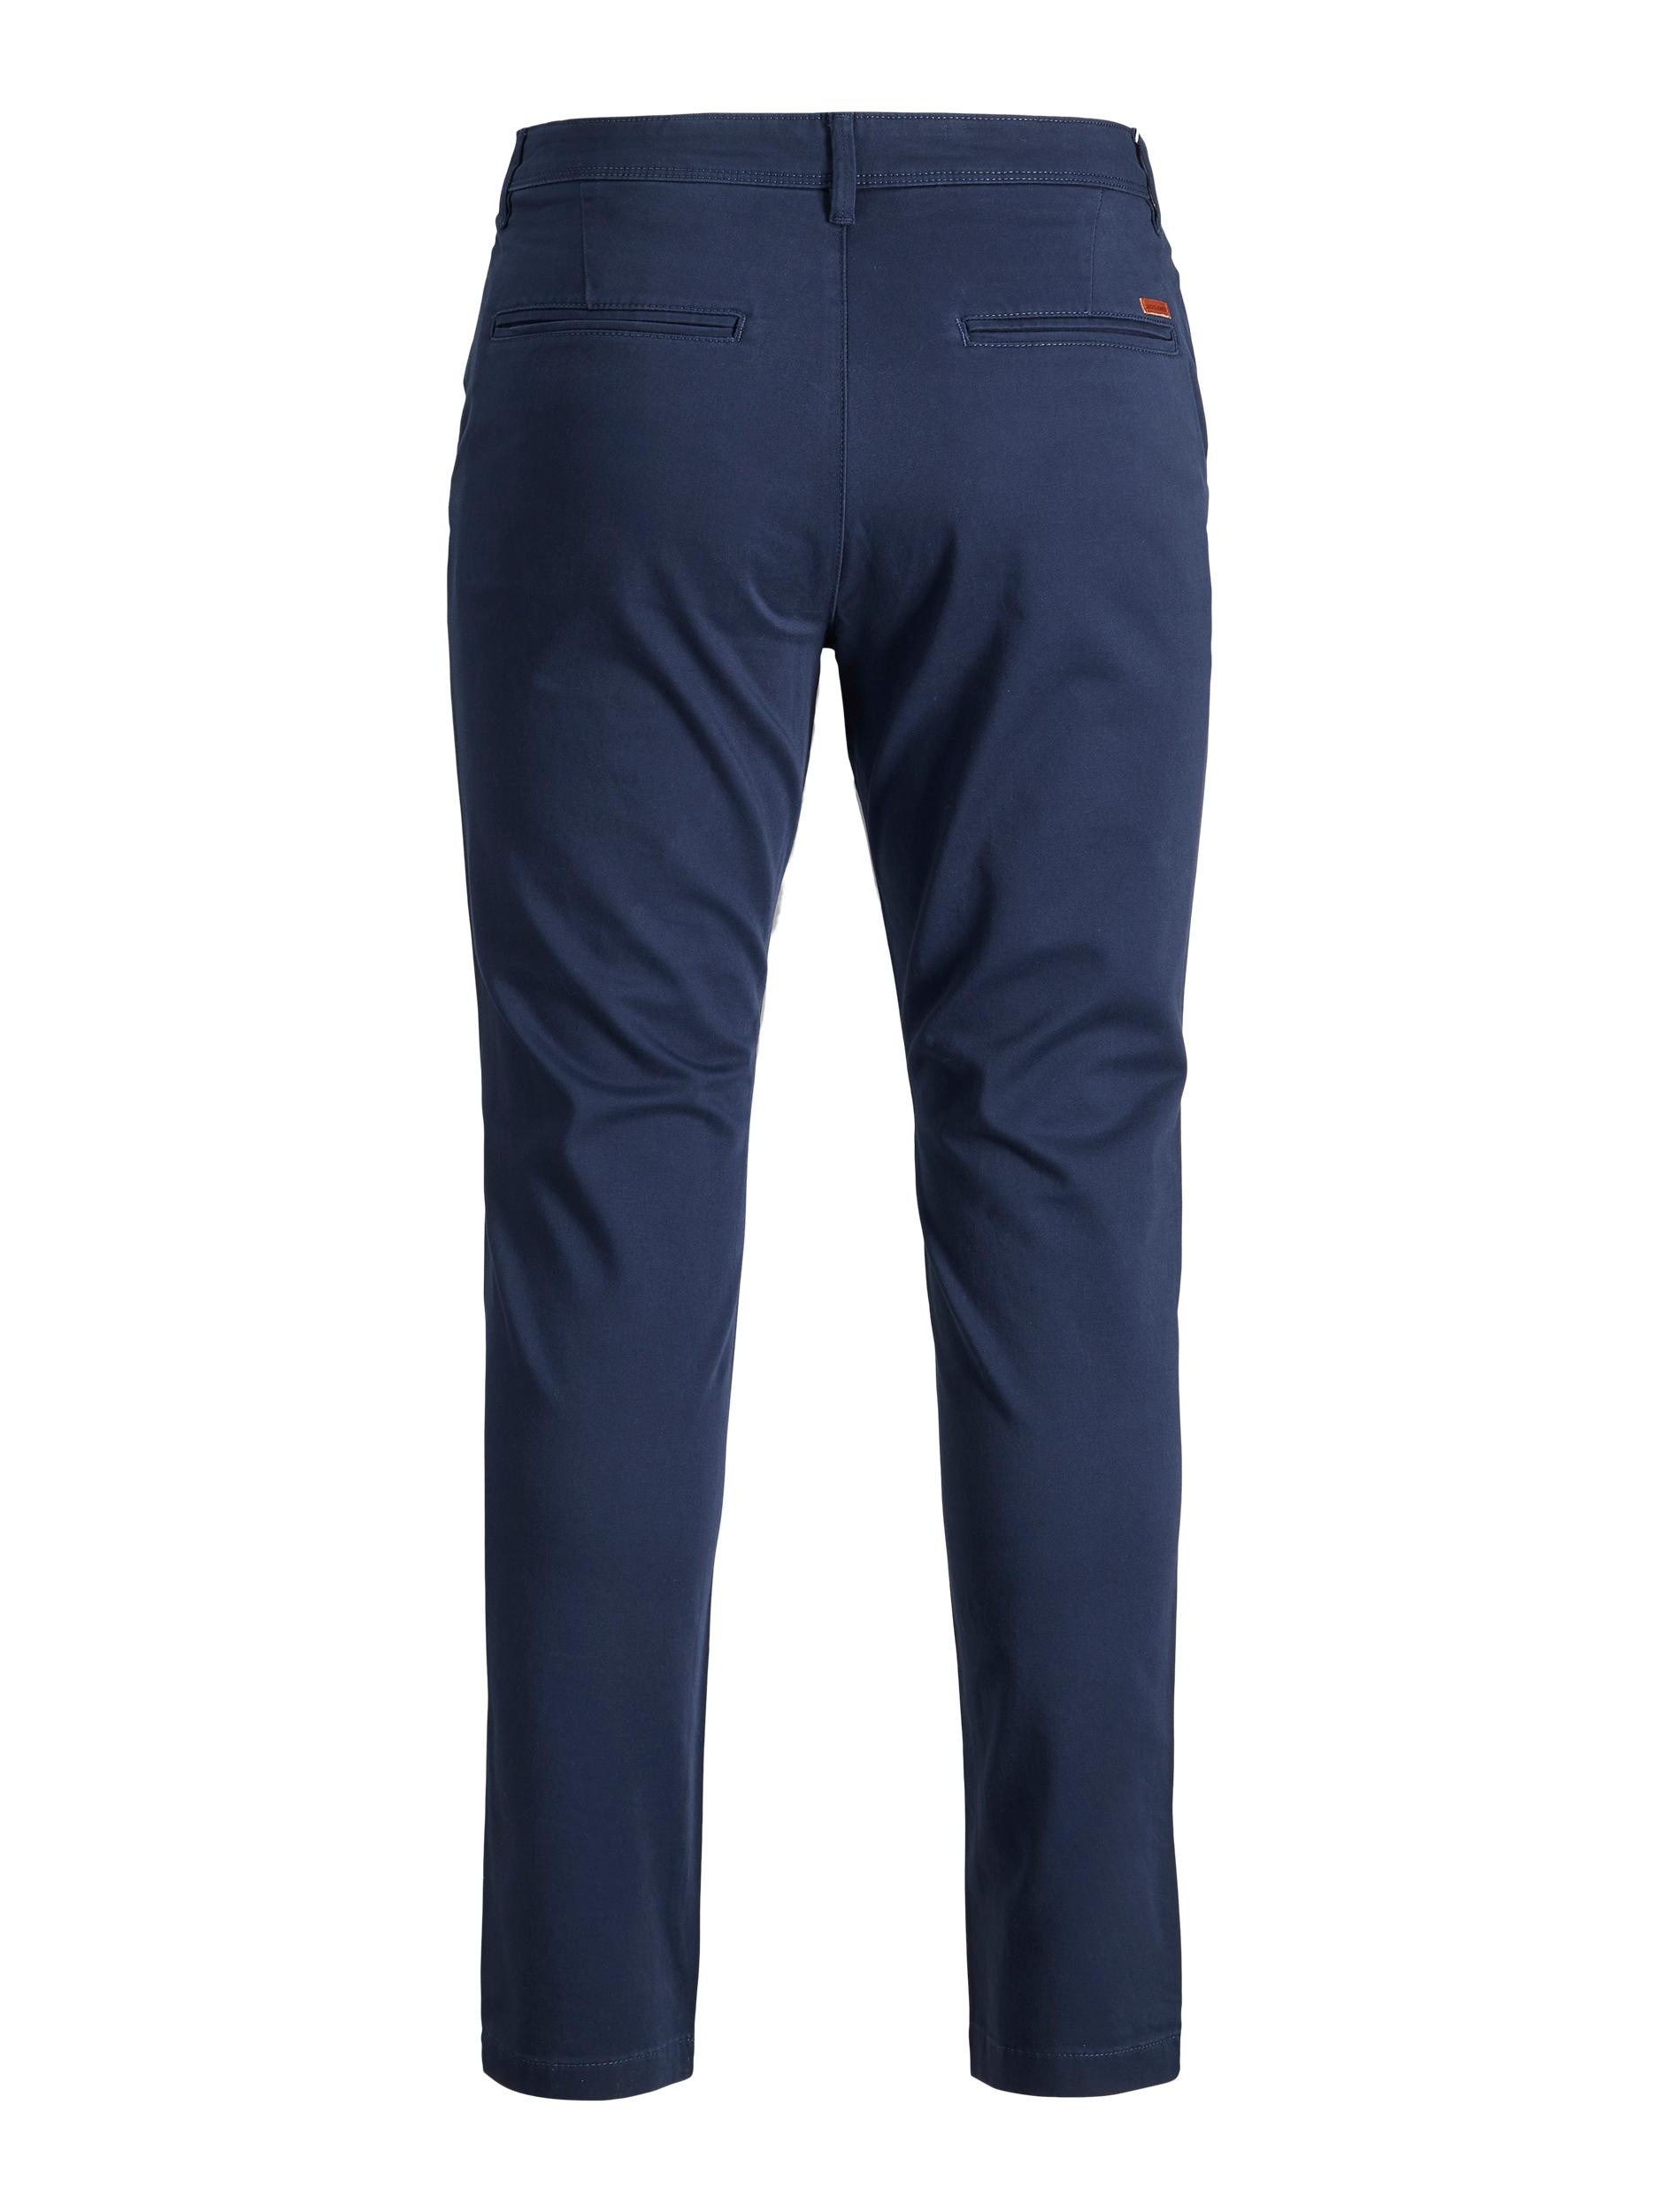 Pantaloni chino slim fit Marco, Blu, large